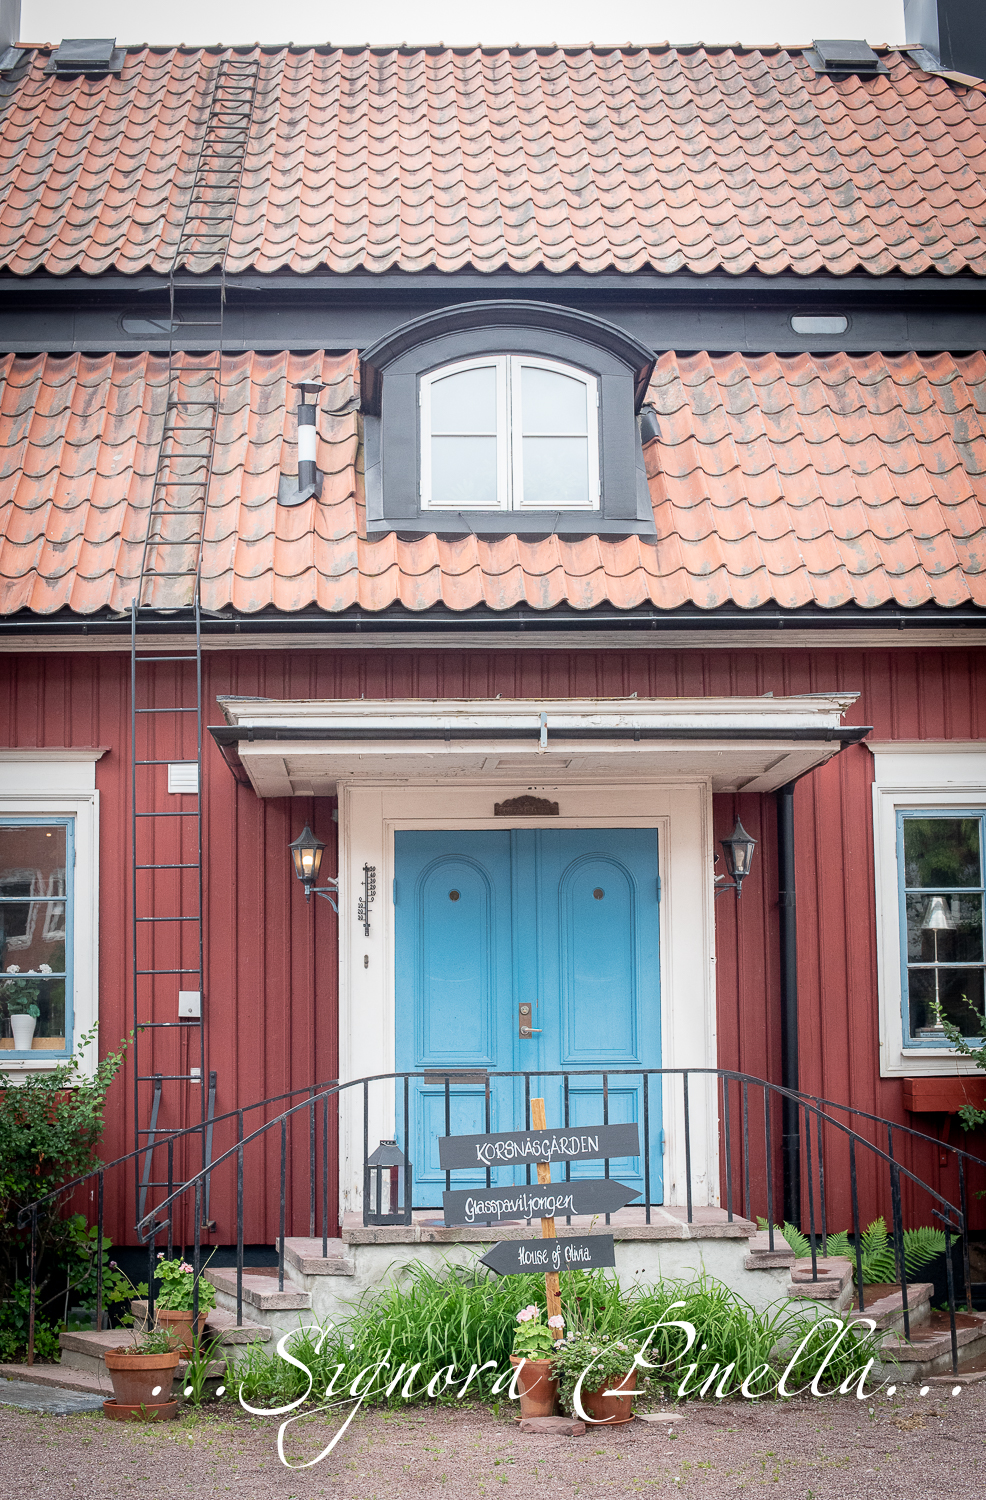 Bilder-Dalarna-Schweden-2019-3957jpg